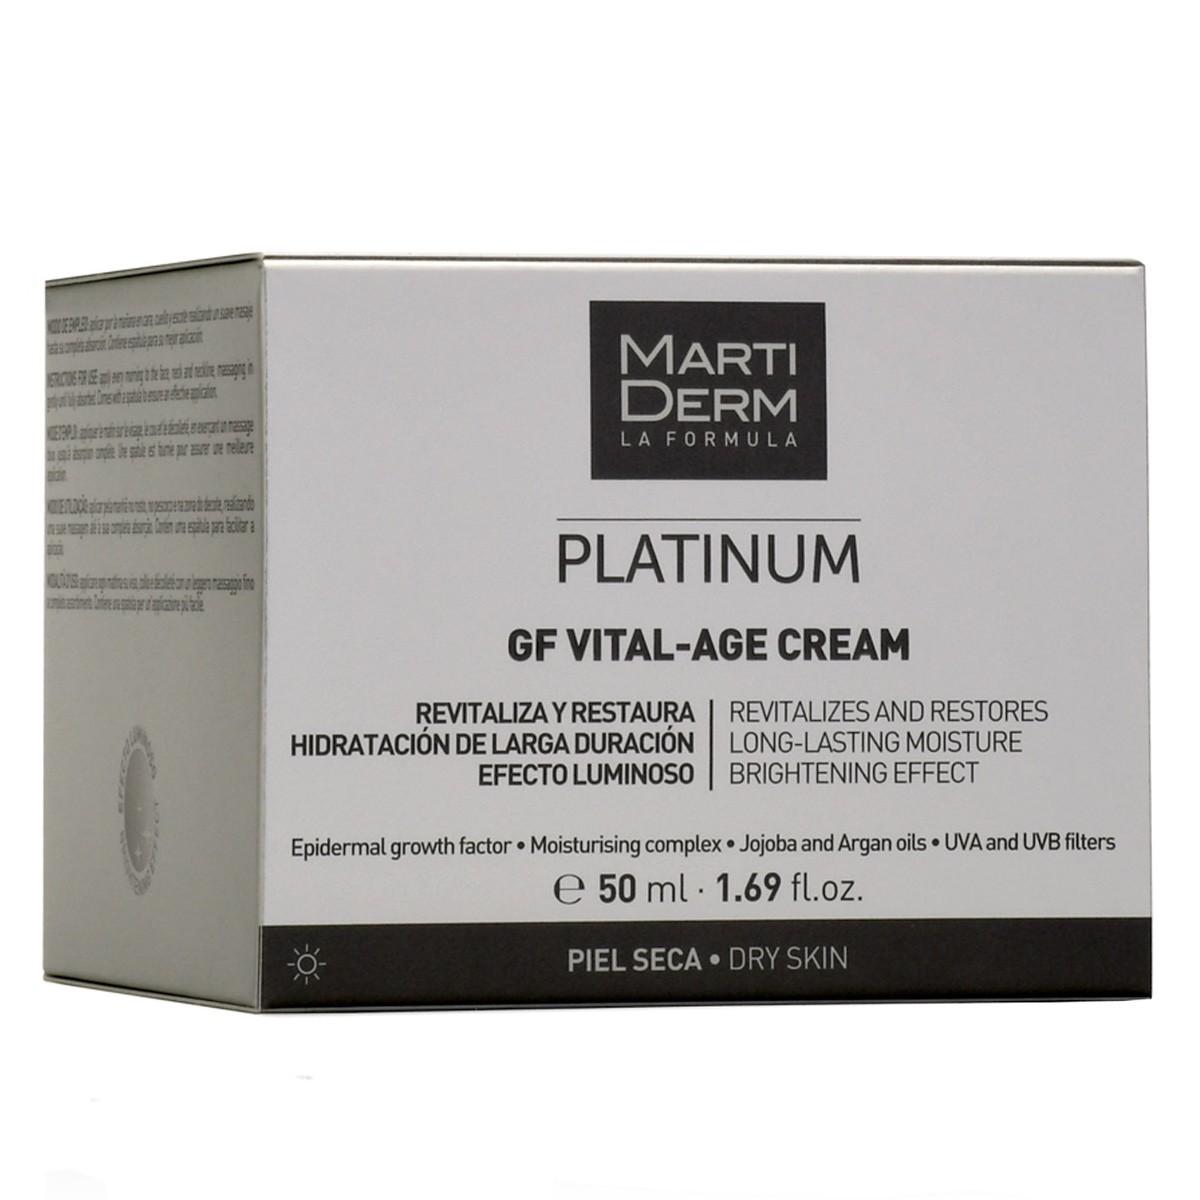 MartiDerm Planitum GF Vital-Age Cream Piel Seca 50ml